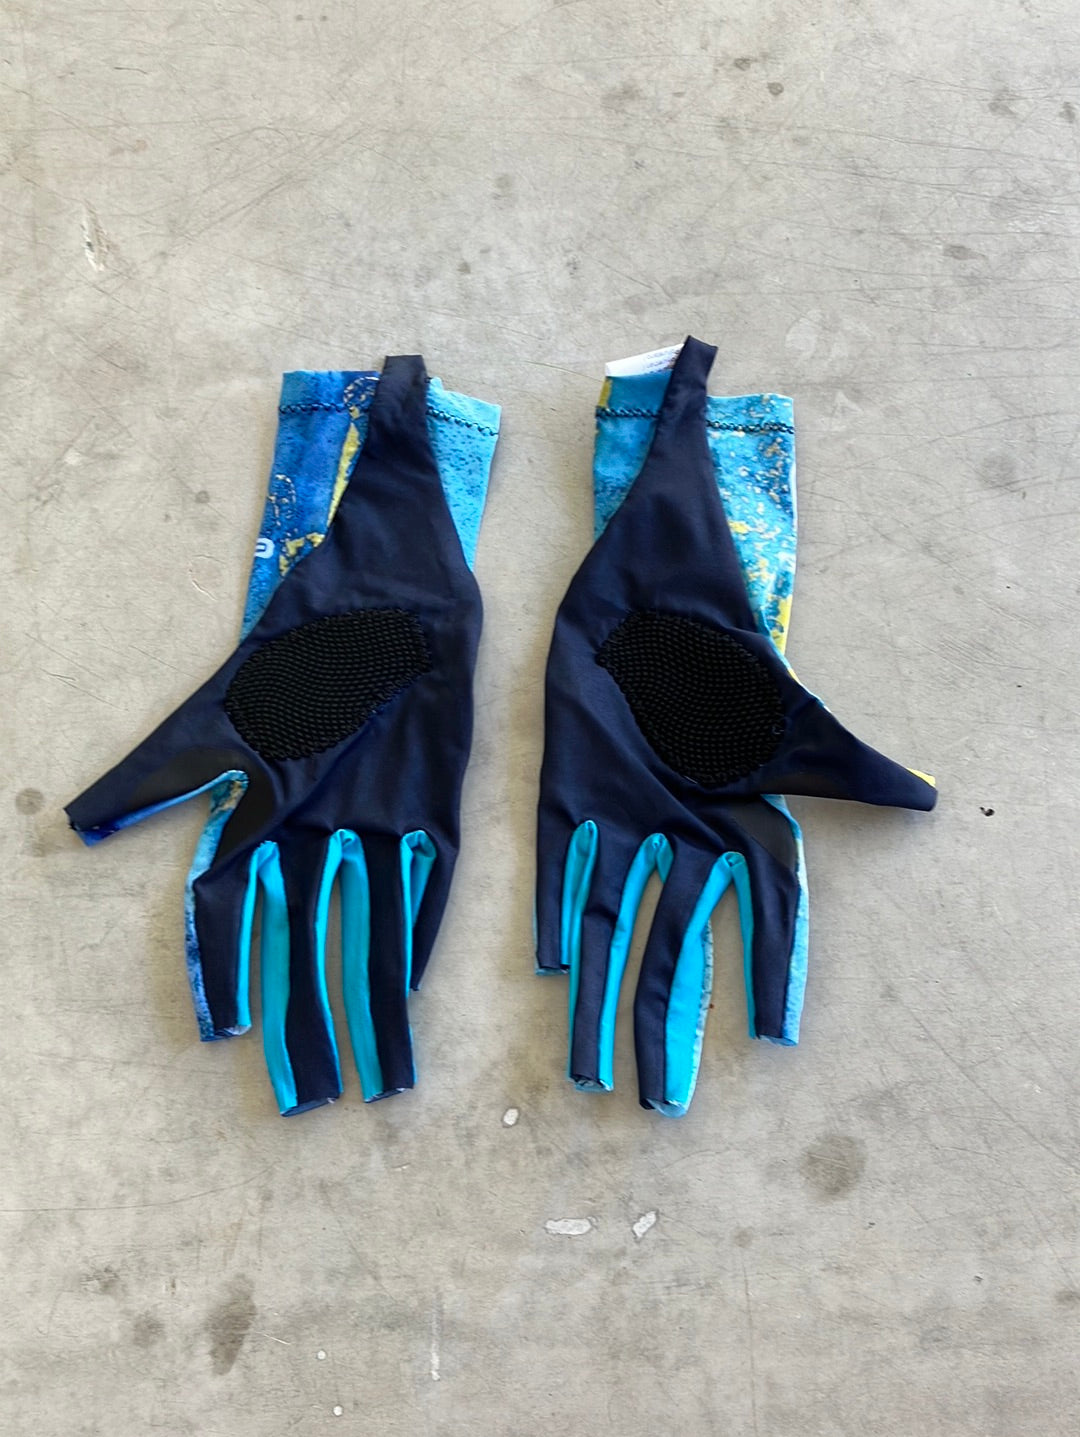 Aero Gloves Unpadded - Tour de France Special Edition | Giordana |  Astana | Pro Cycling Kit